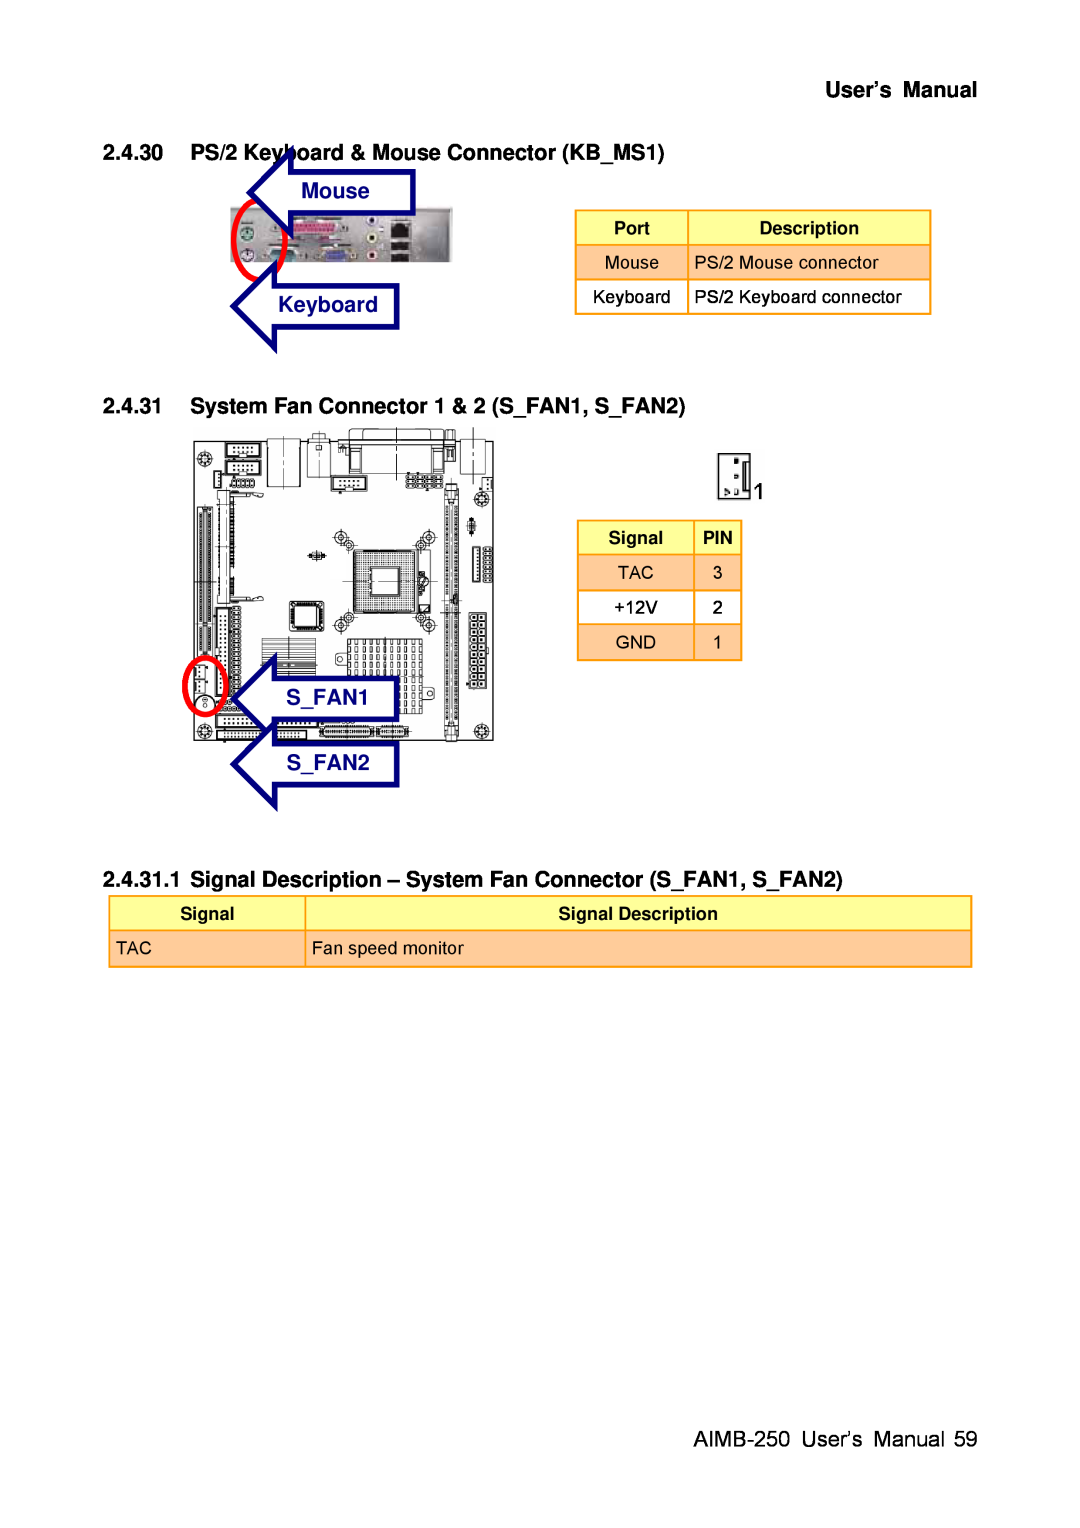 Advantech AIMB-250 User’s Manual 2.4.30 PS/2 Keyboard & Mouse Connector KBMS1 Mouse, SFAN1 SFAN2, Port, Description 